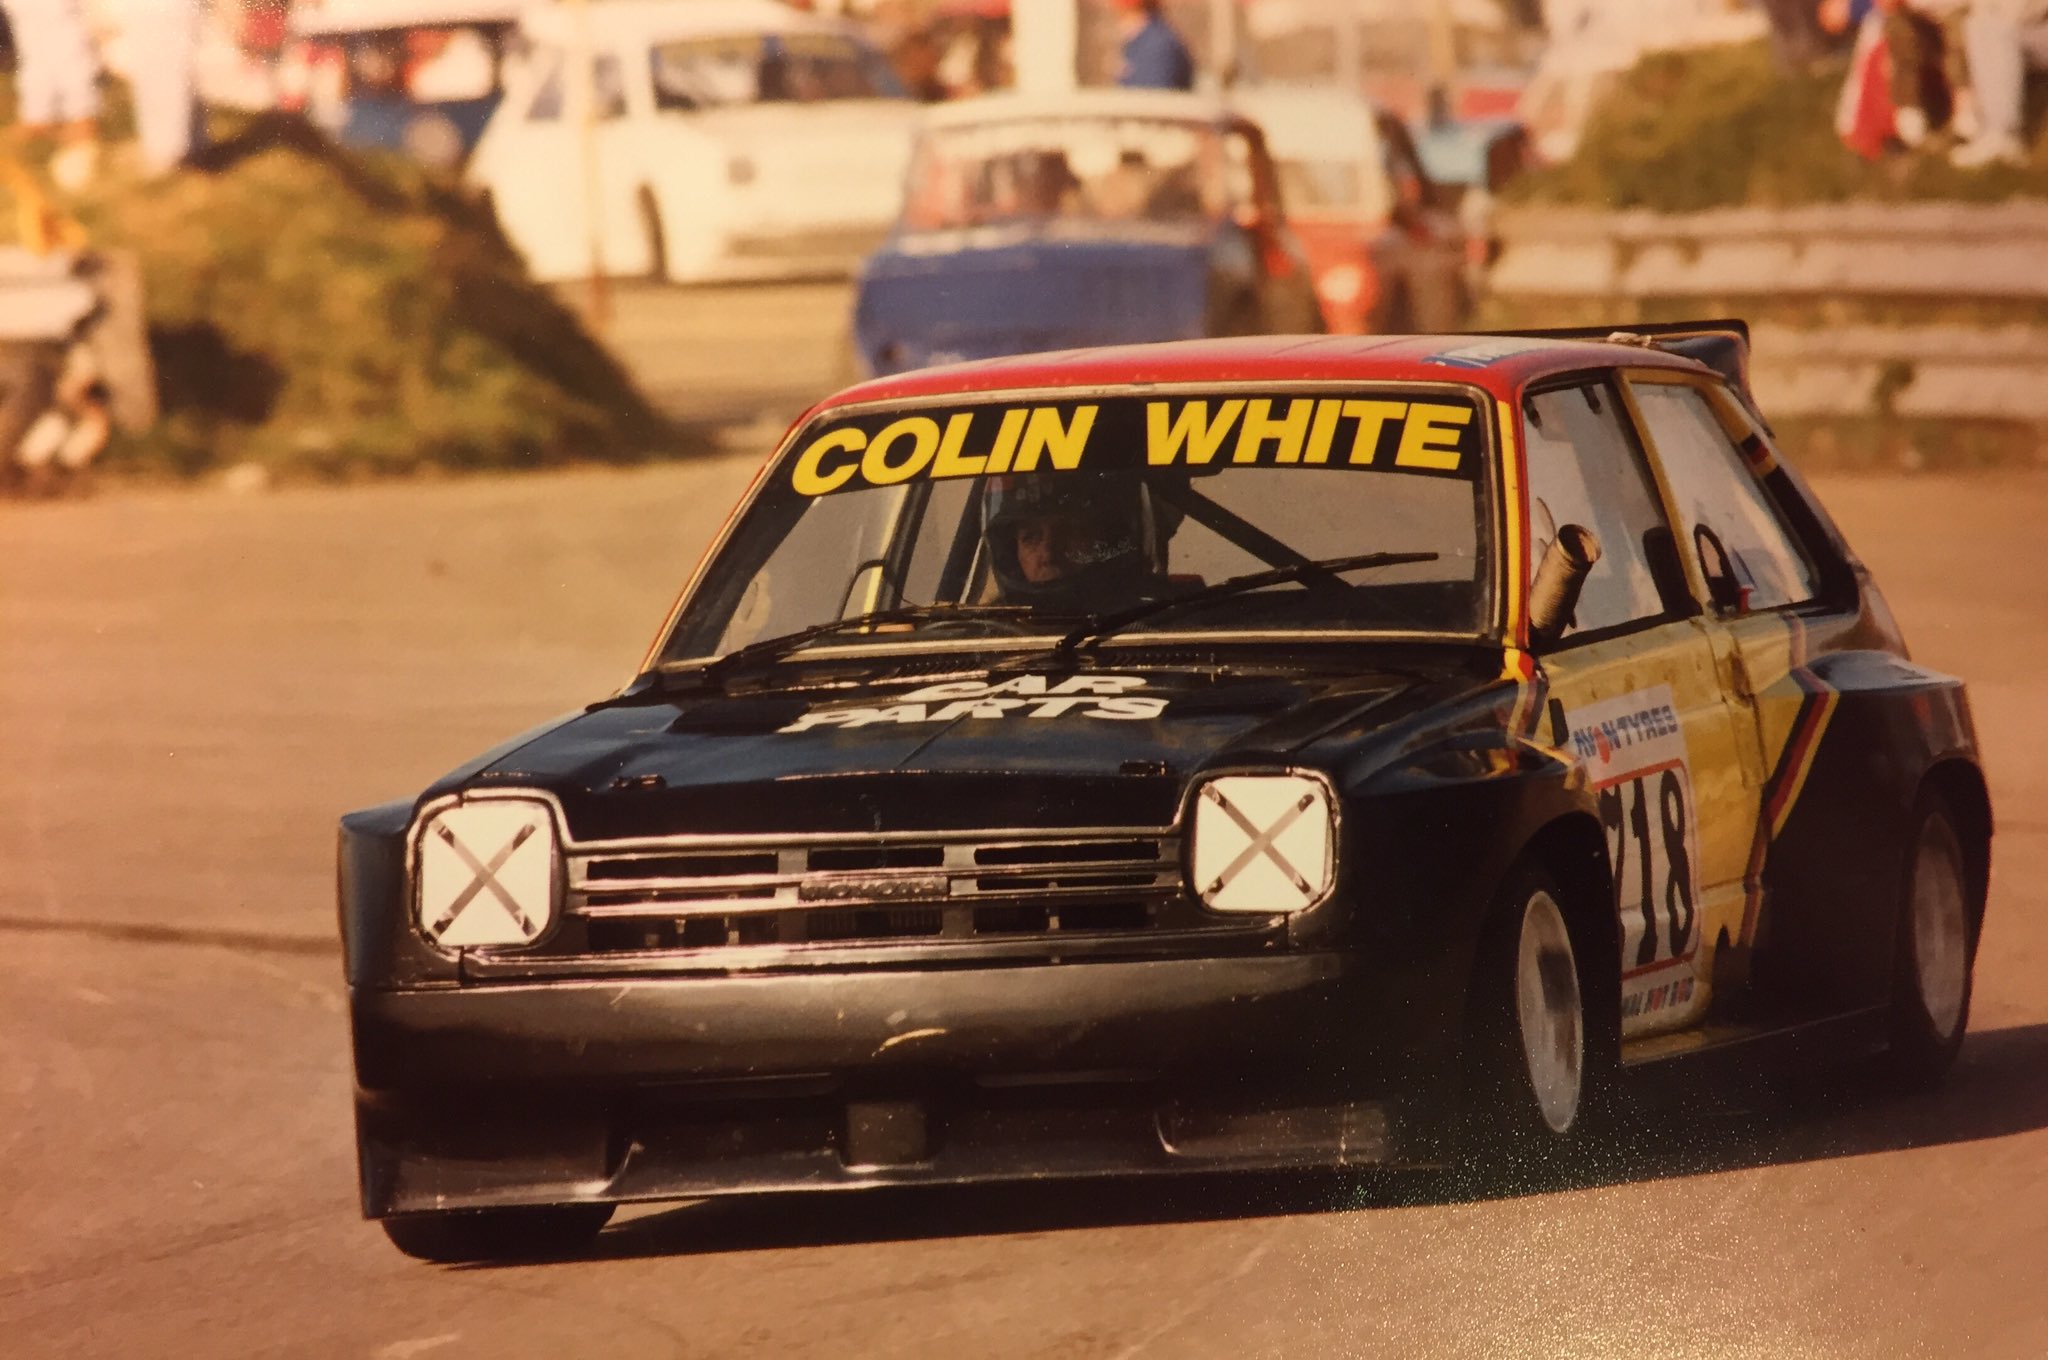 chris everill on X: “@WeltchMedia: #Motorsport memories - Colin